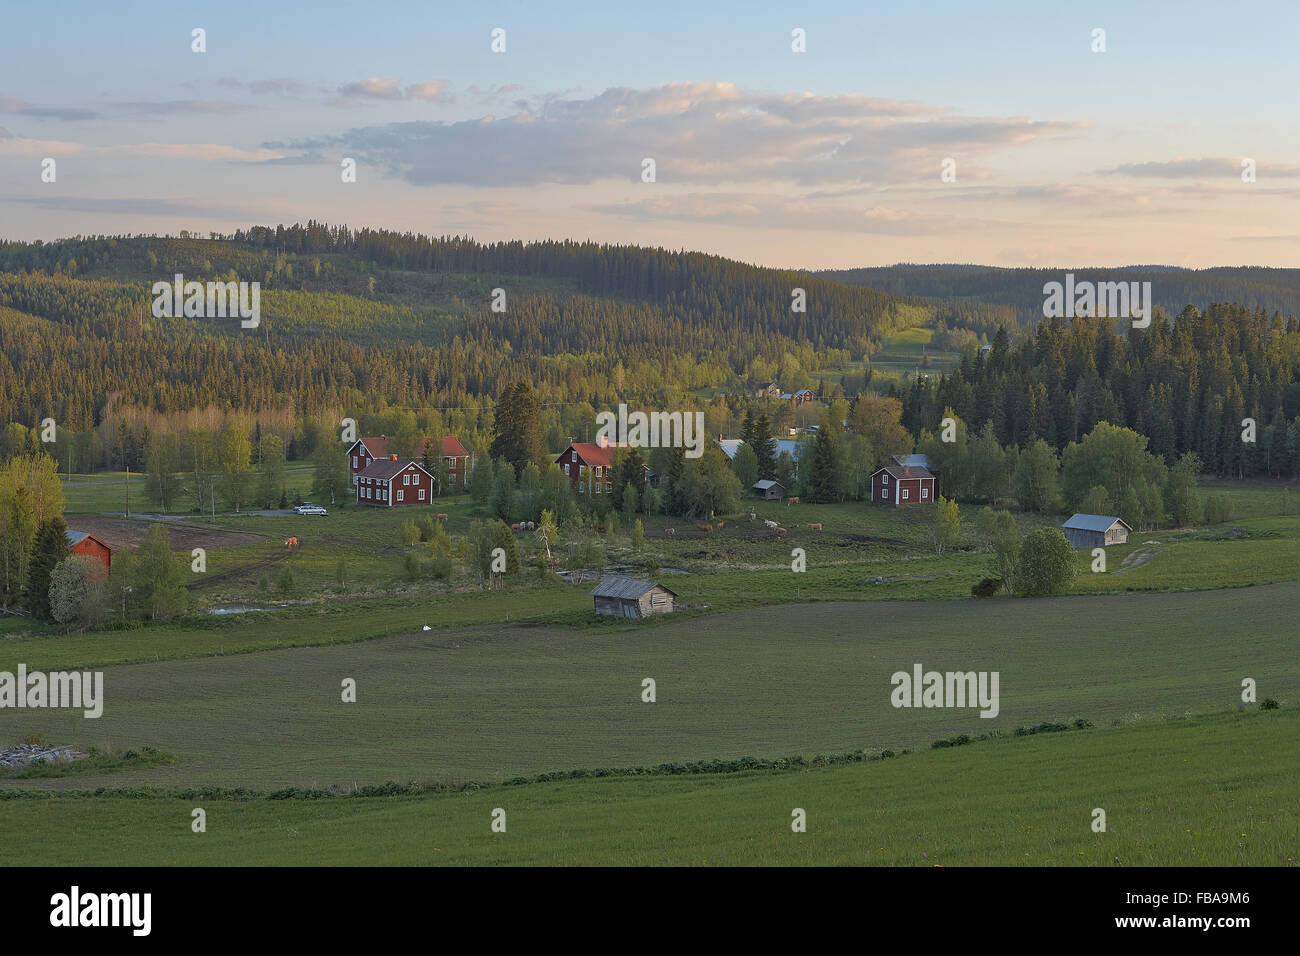 Suecia, Jamtland, Offerdalsbygden, vista panorámica del paisaje rural Foto de stock